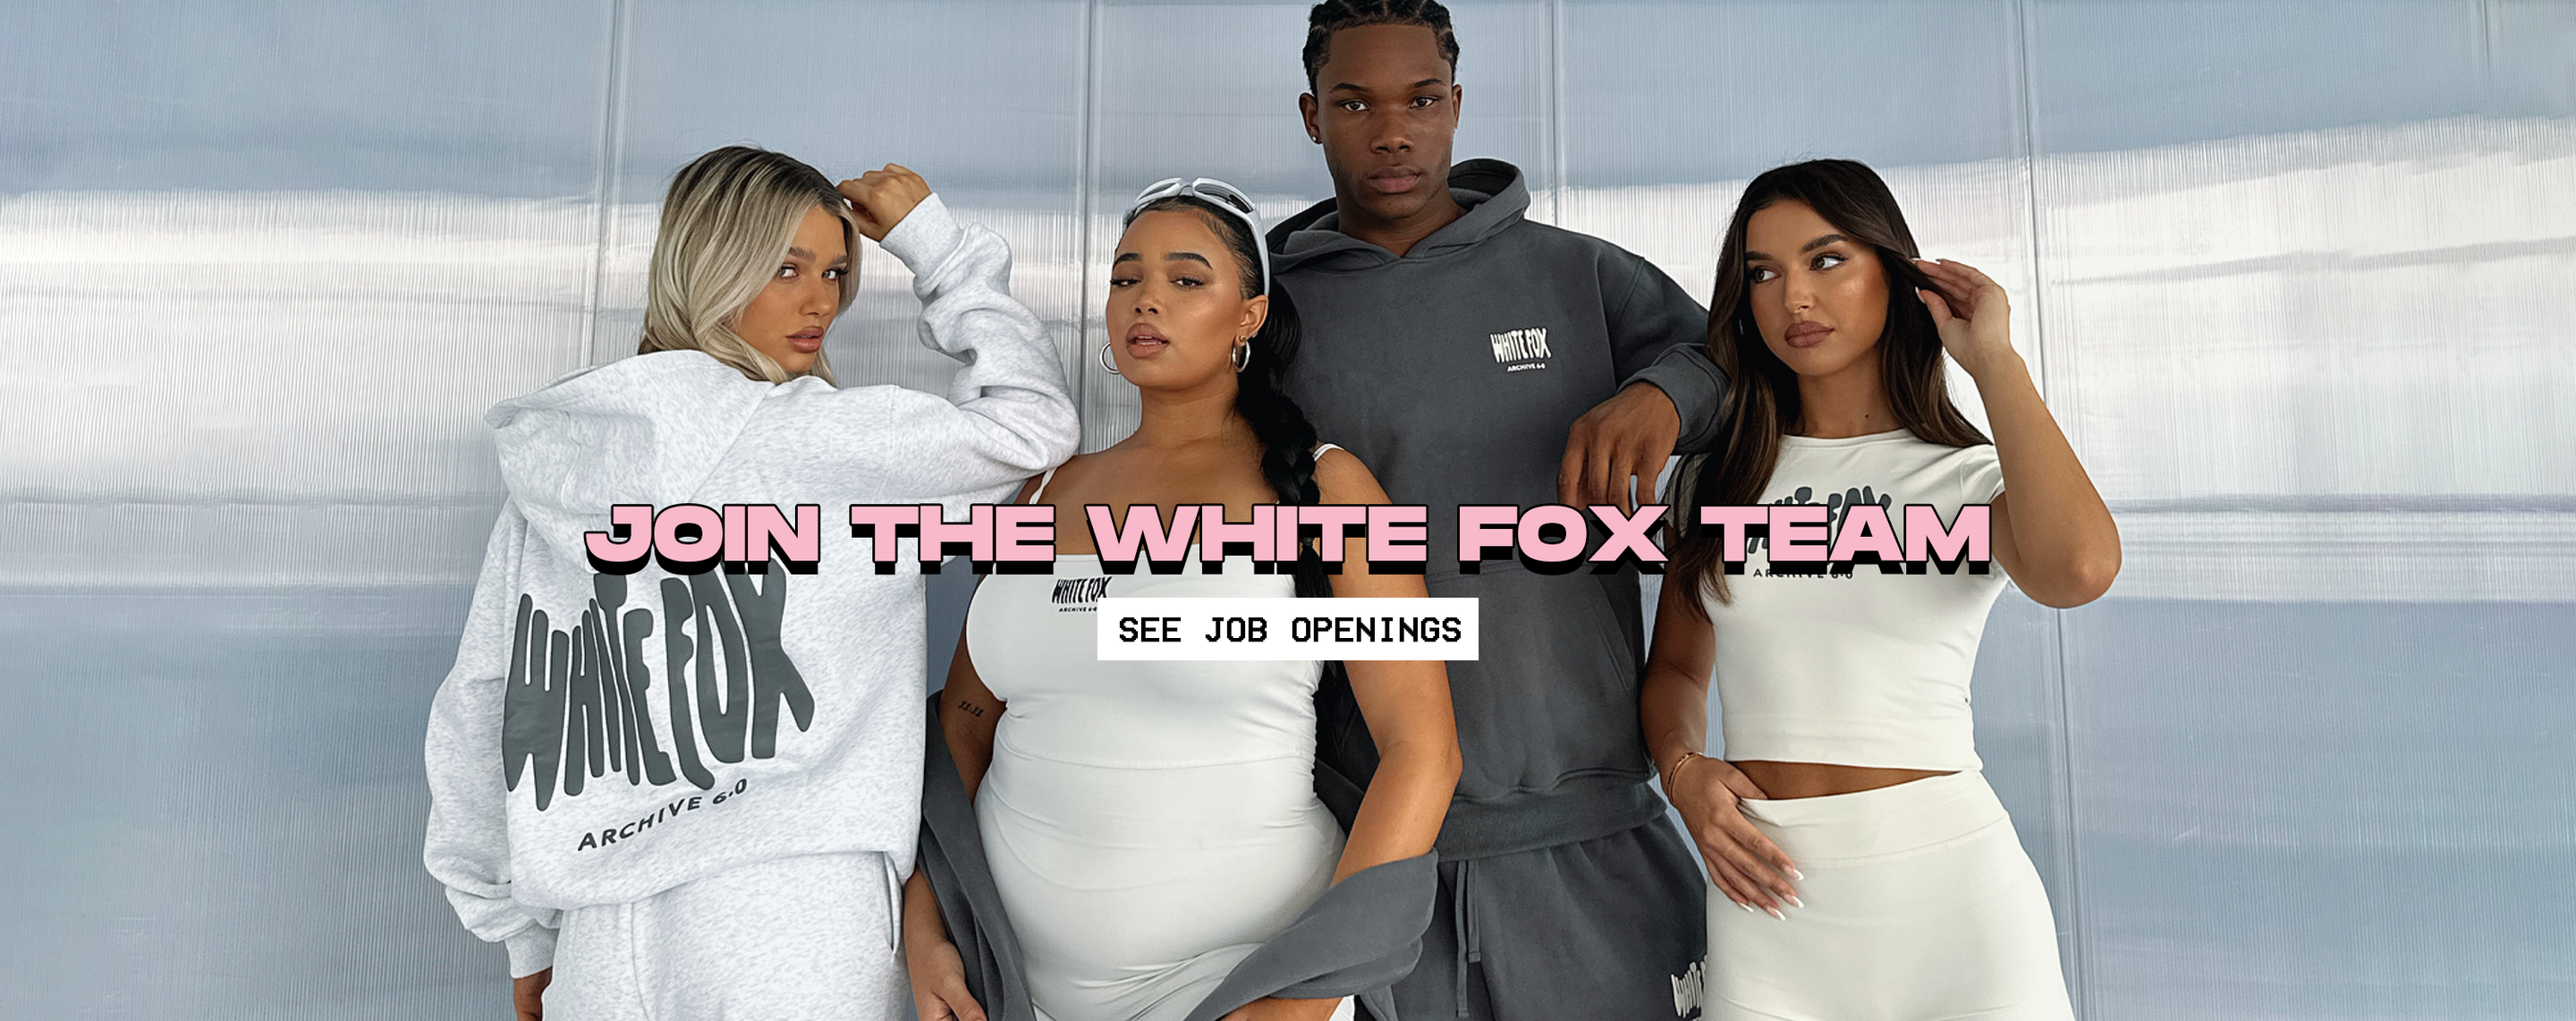 Join the white fox team